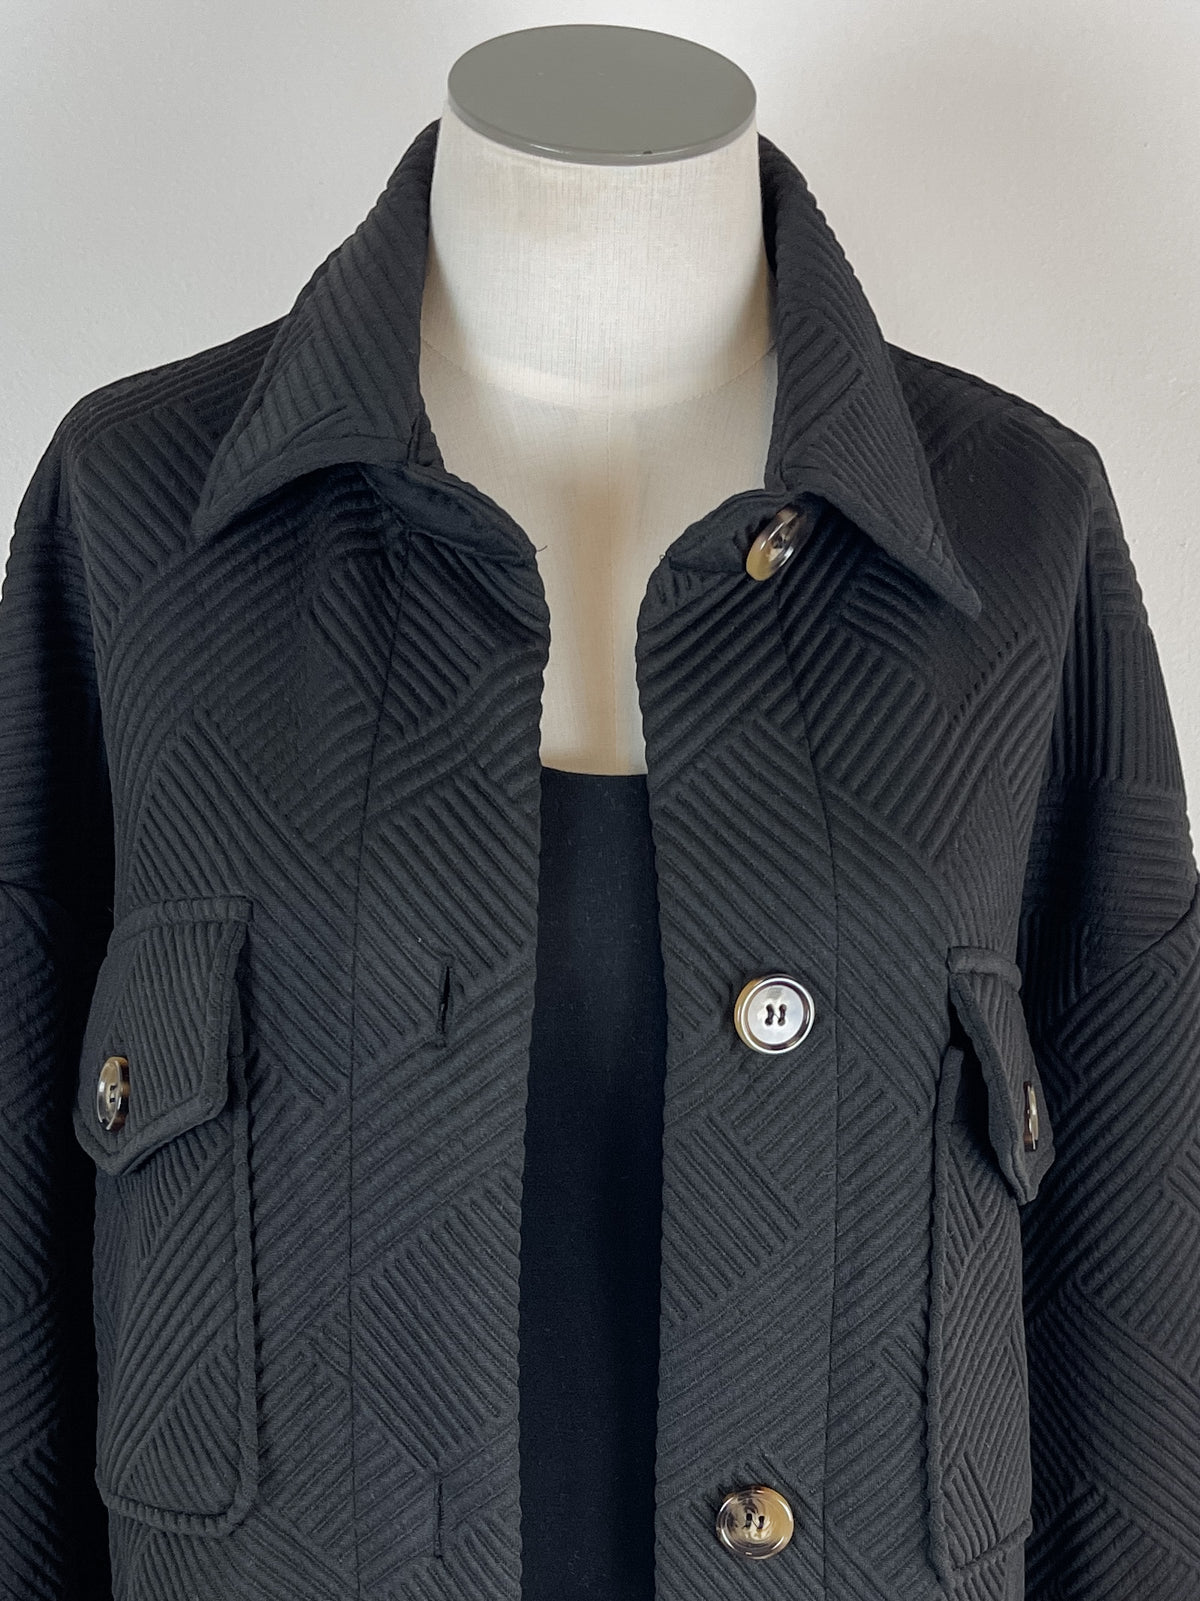 Agatha Textured Jacket in Black